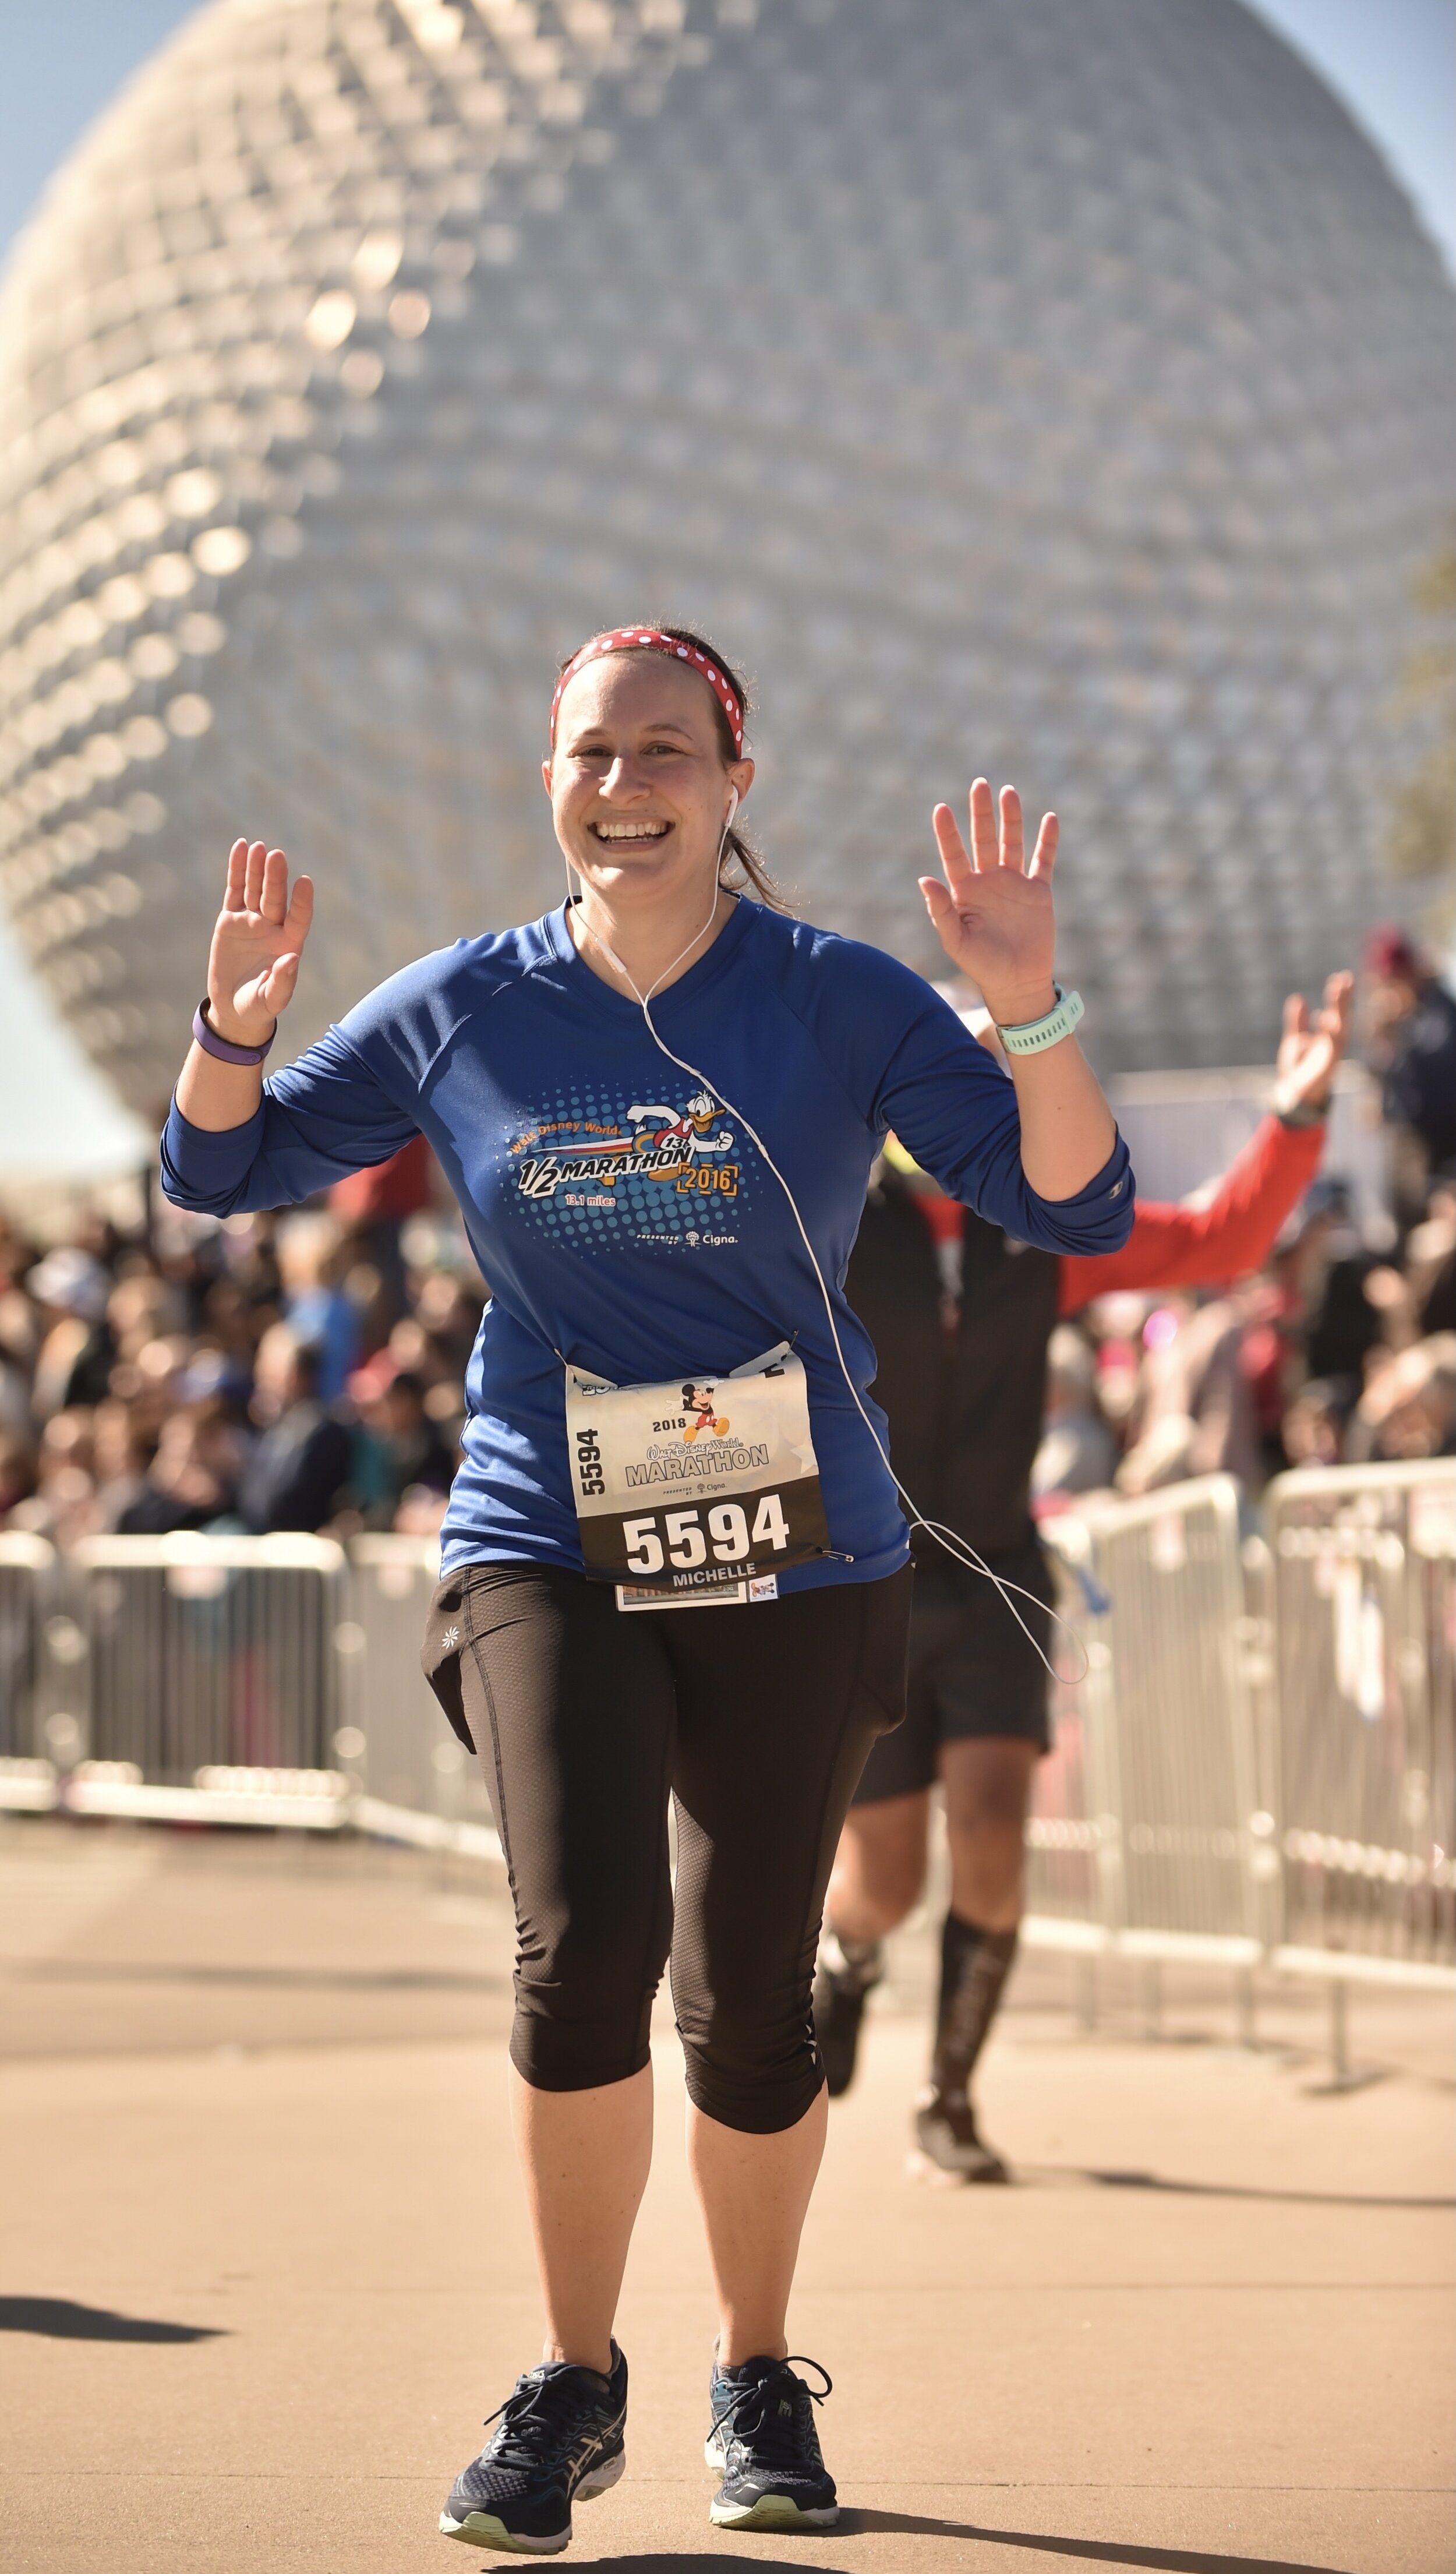 Michelle having fun (gasp!) a the Disney Half Marathon in 2016